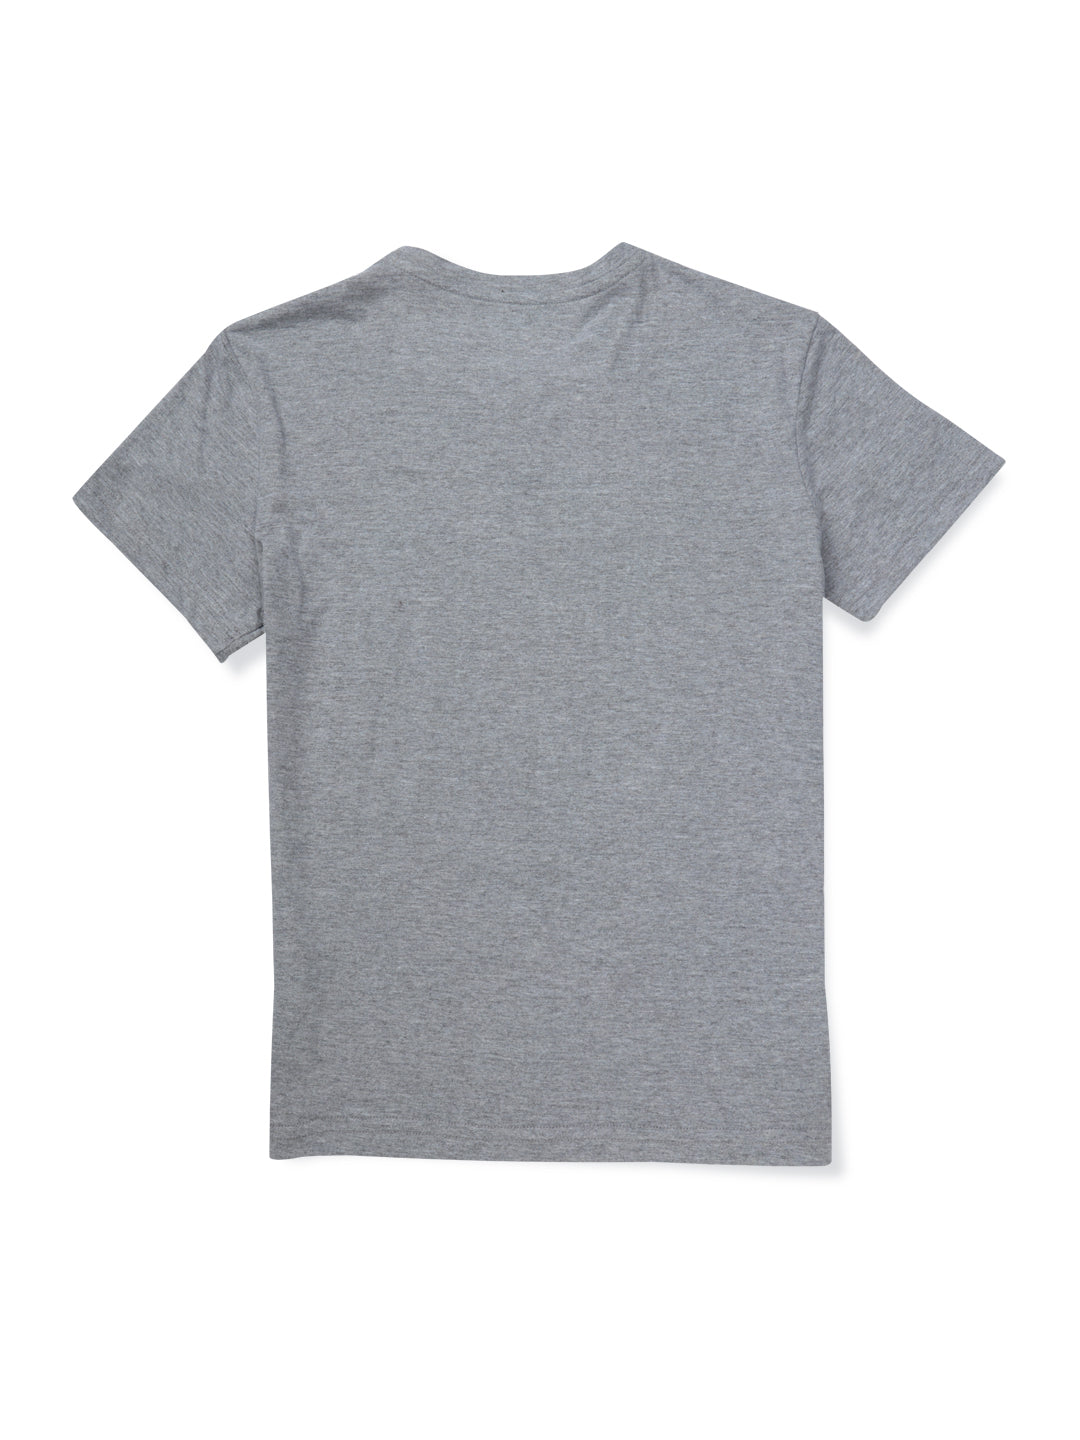 Boys Grey Printed Cotton T-Shirt